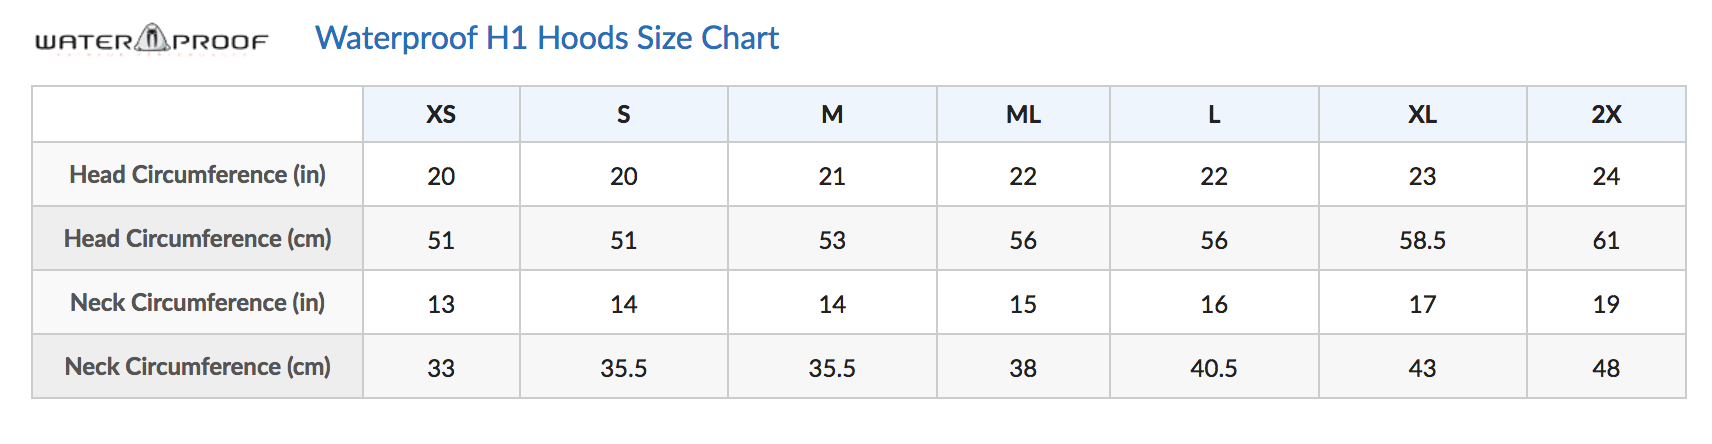 Male Size Chart for H1 3/5mm Hood - No BIB- Closeout